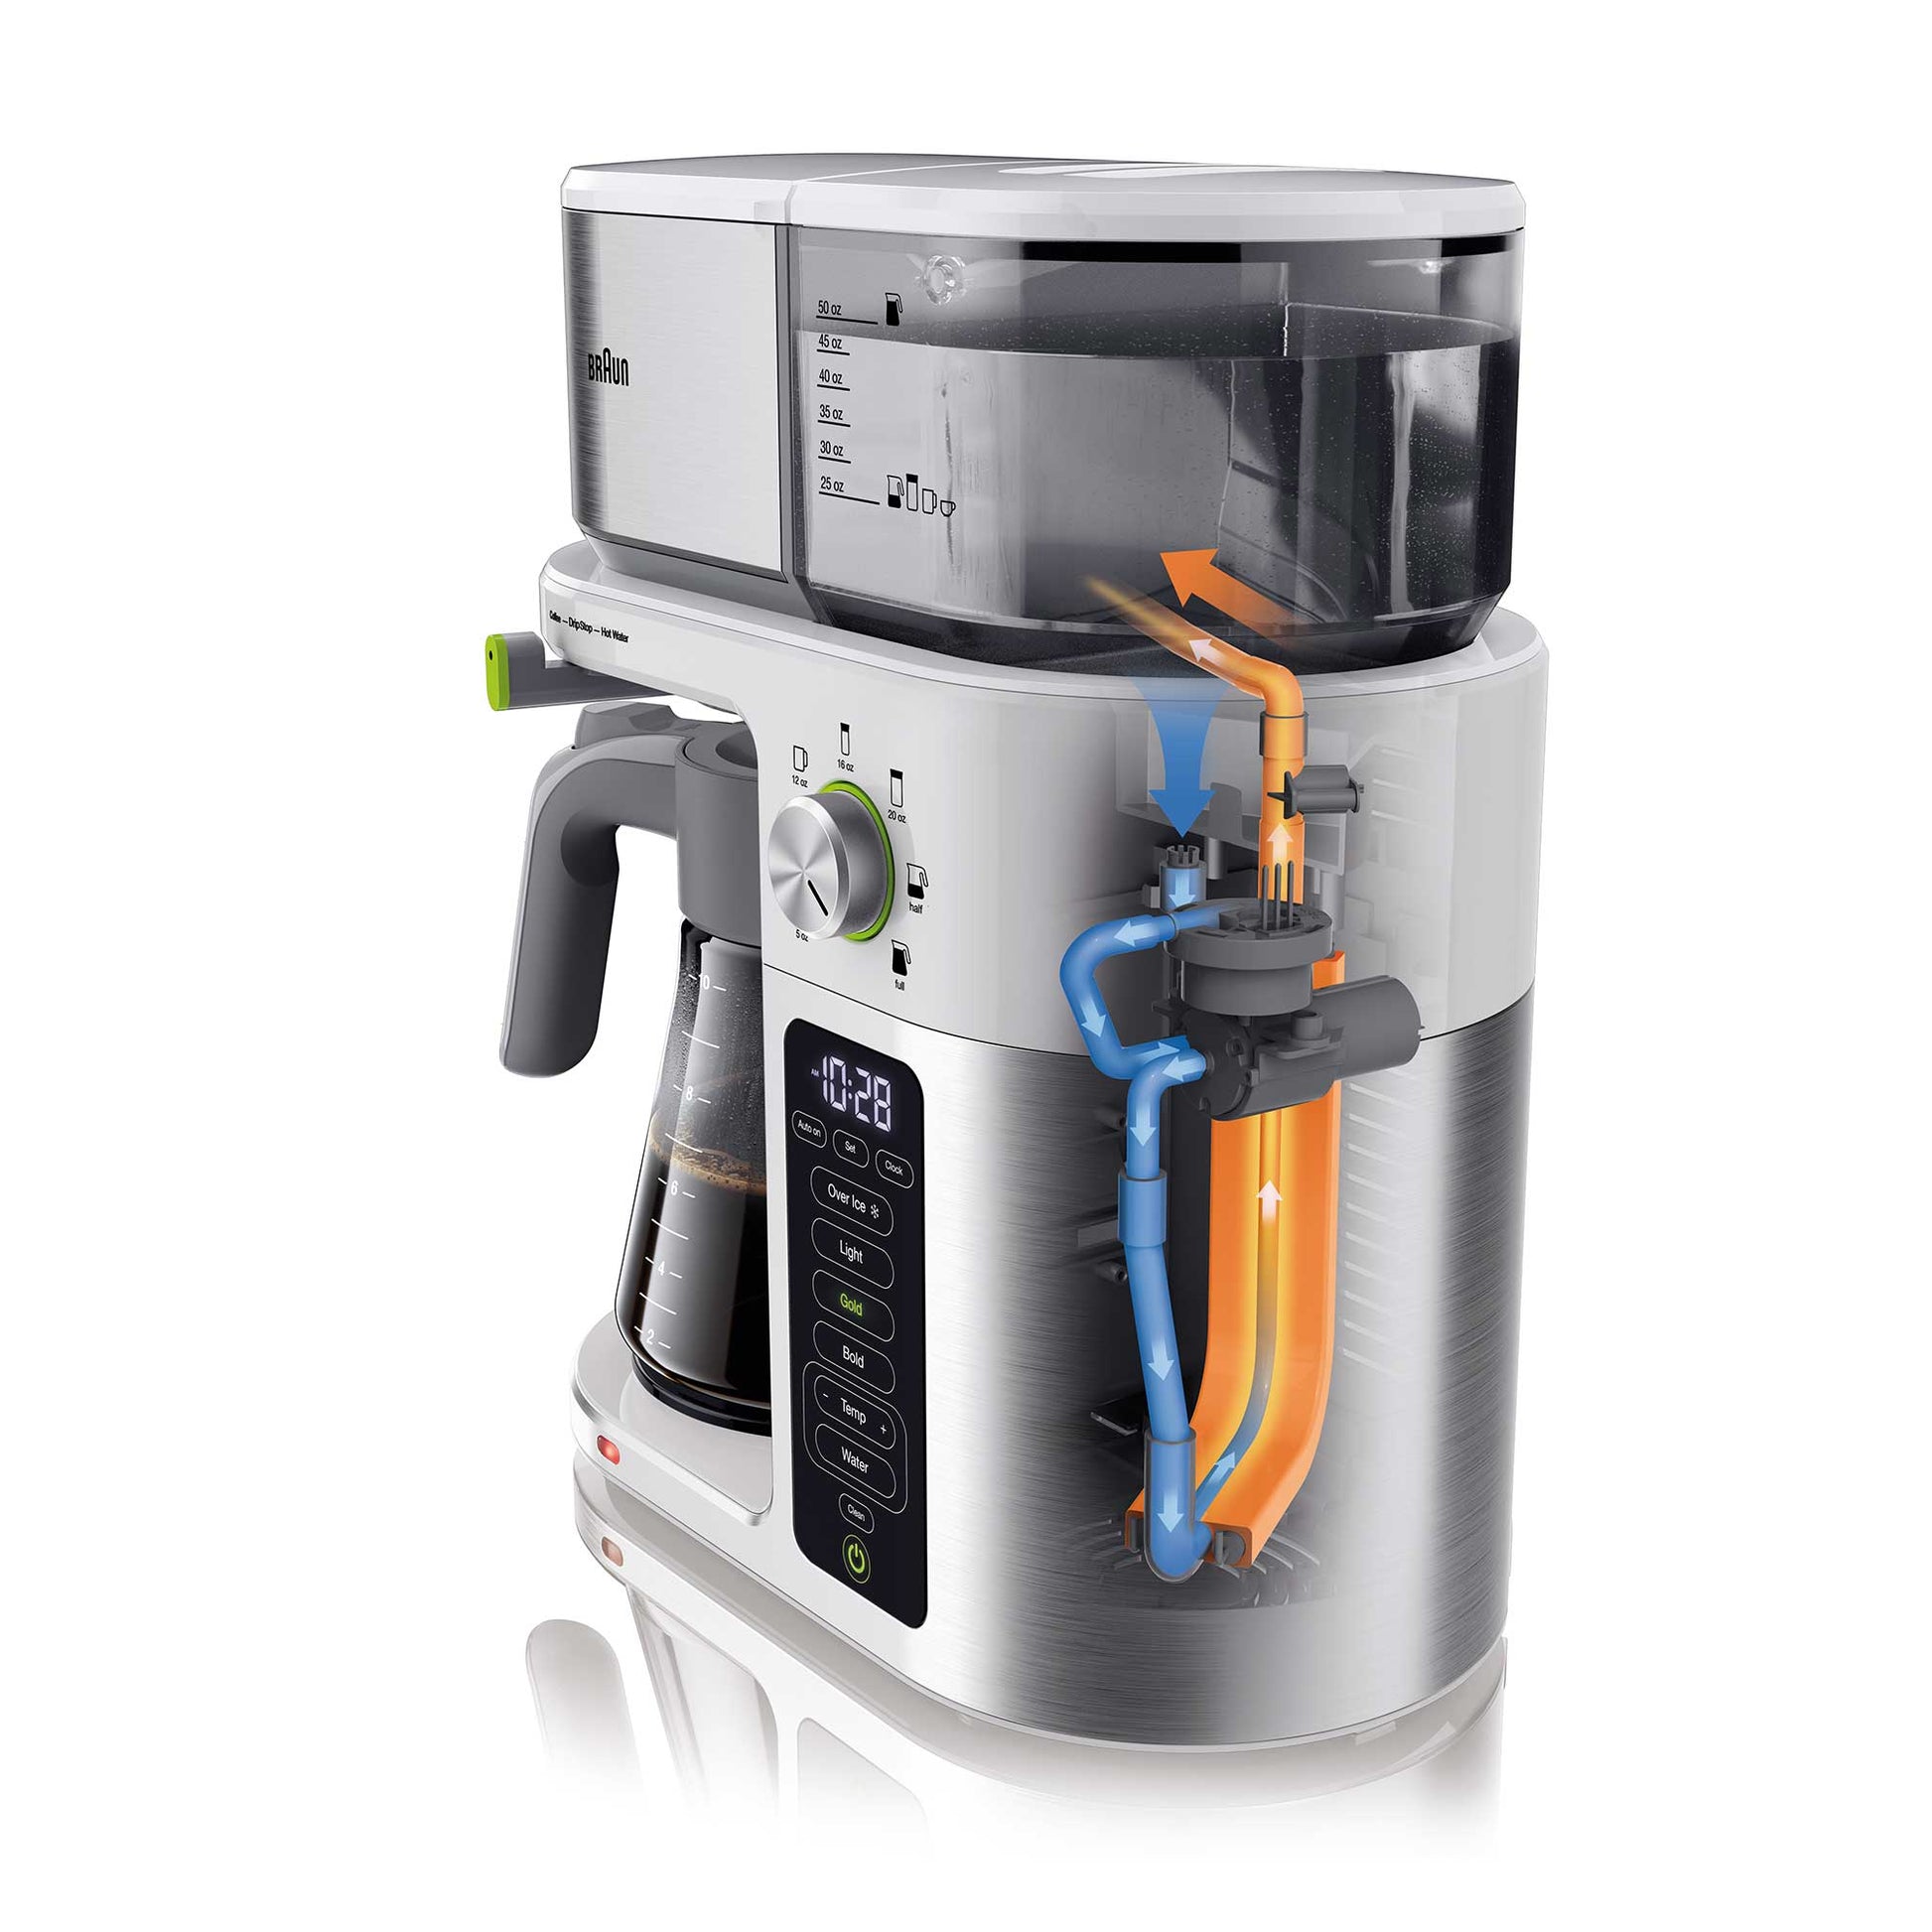 Braun MultiServe Coffee Machine - How To Brew Coffee 